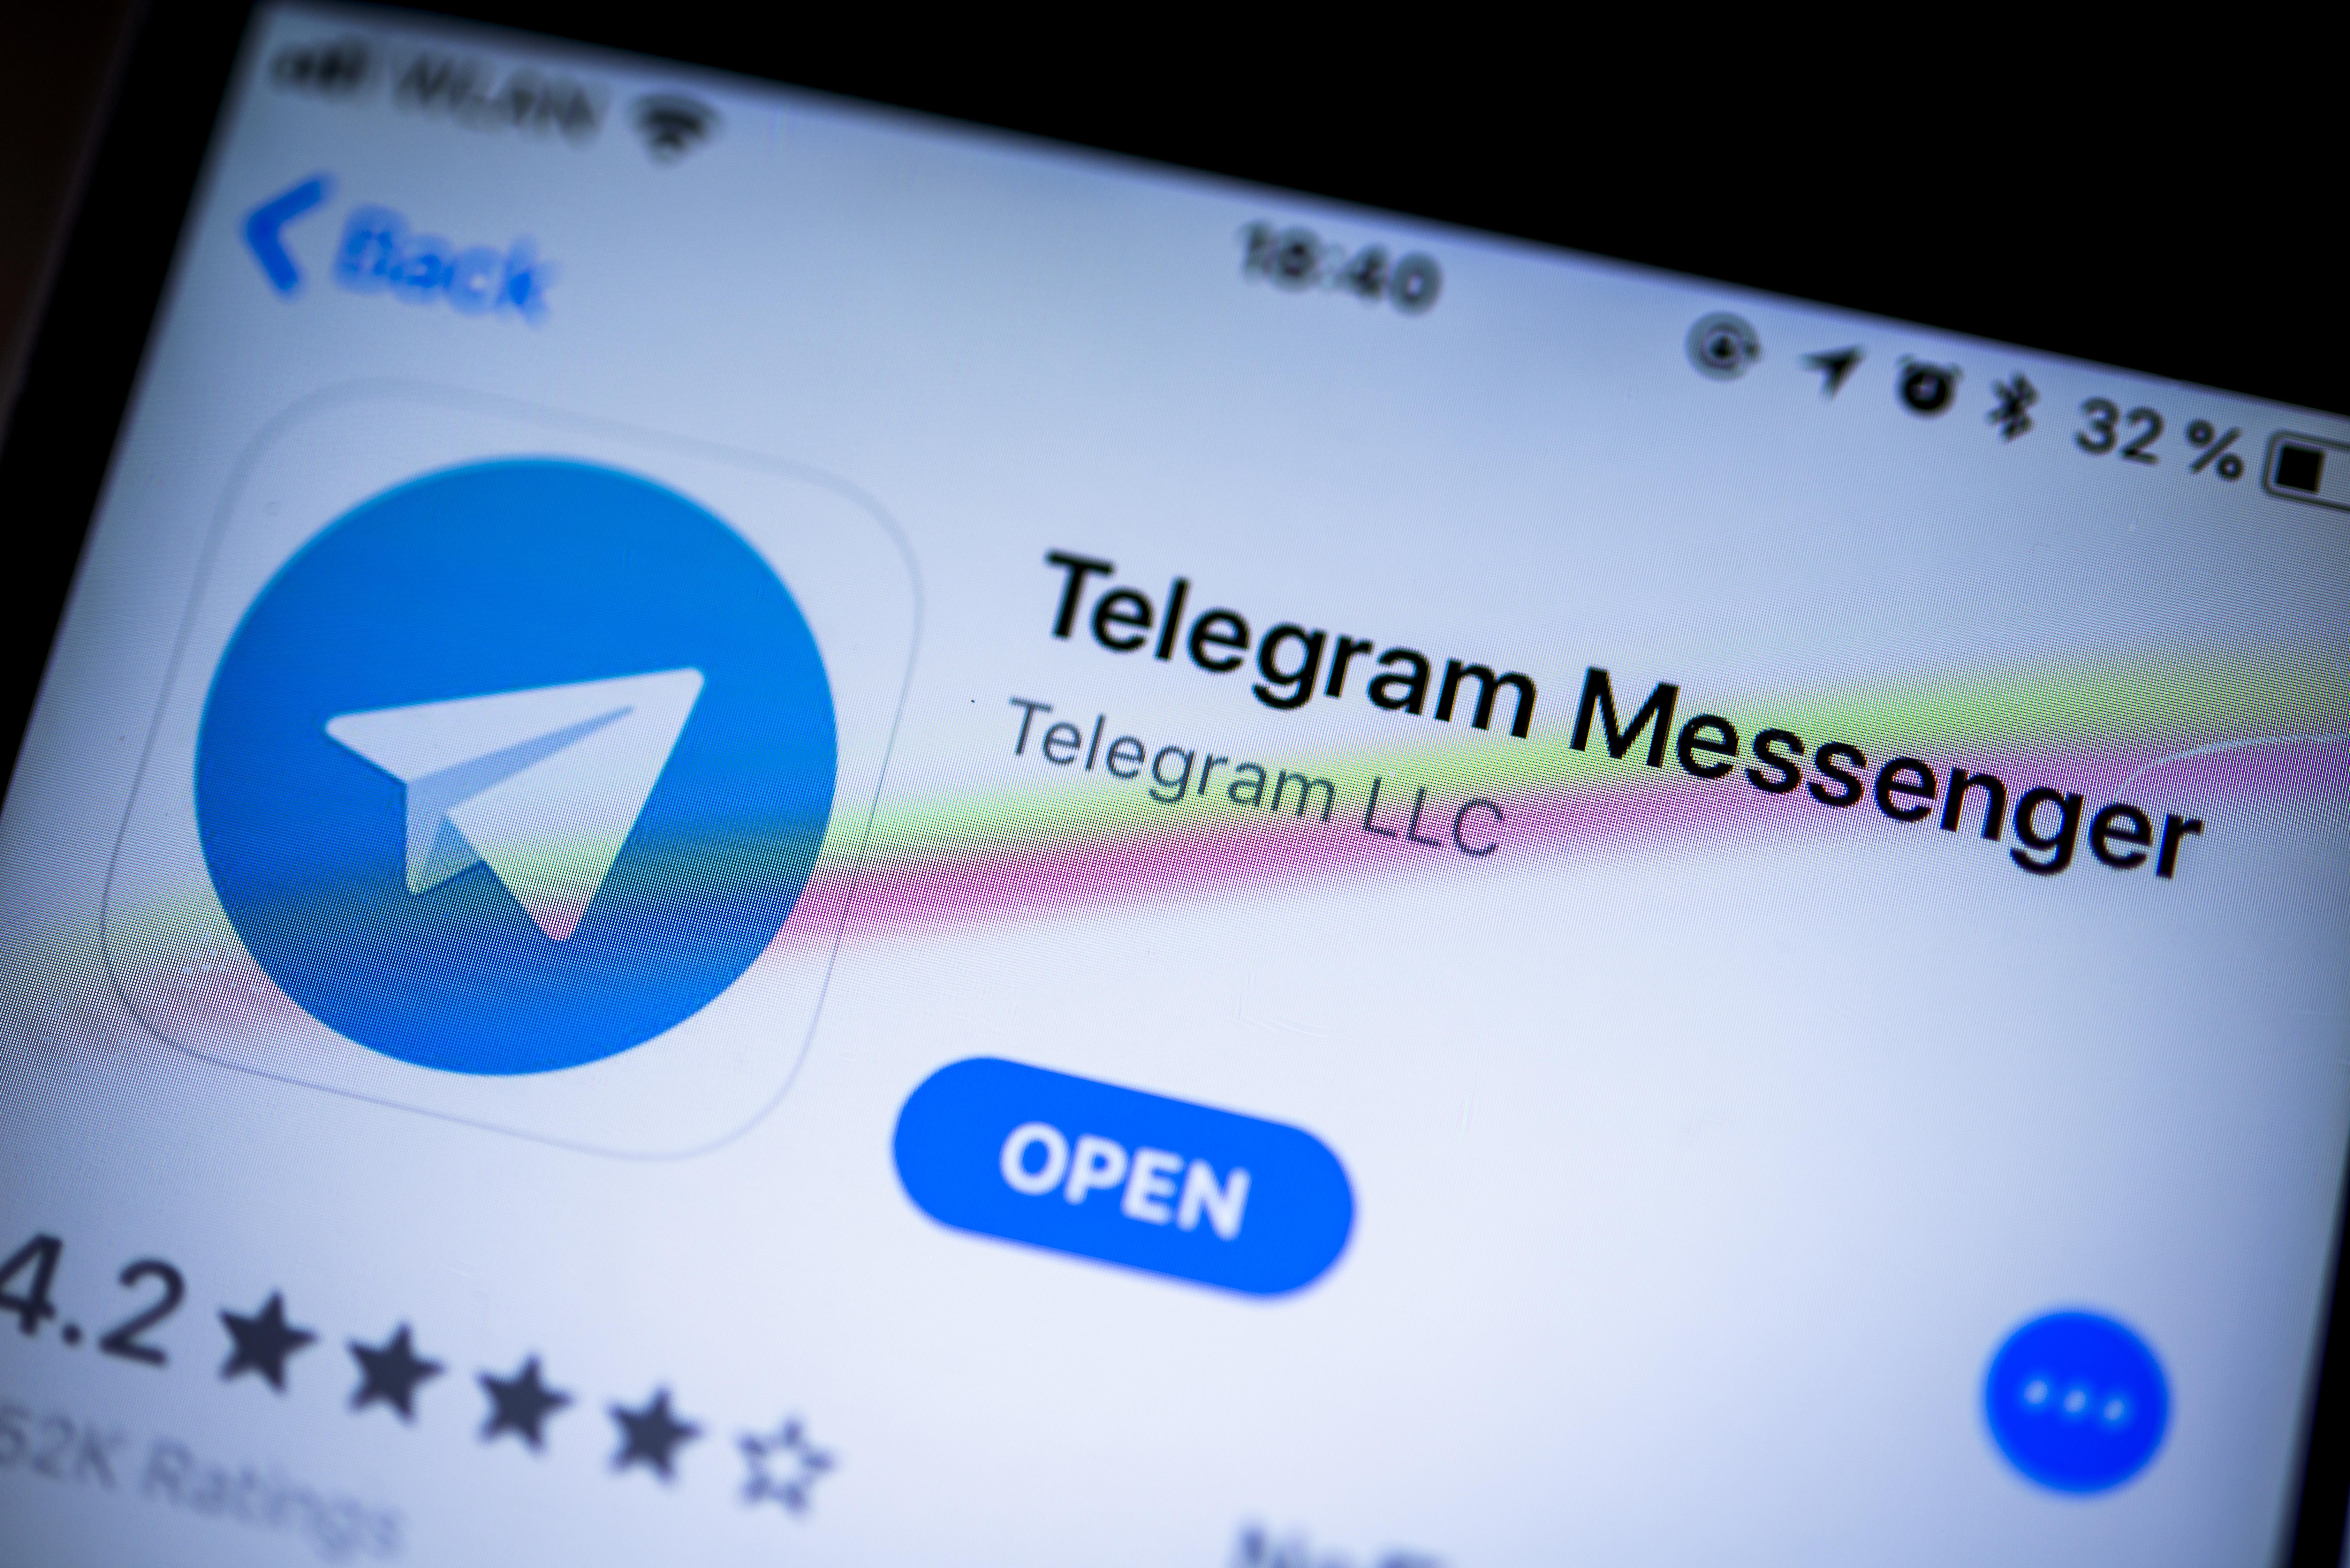 Опен телеграм. Телеграмм. Telegram Messenger. Мессенджер телеграмм. Apple Store телеграмм.